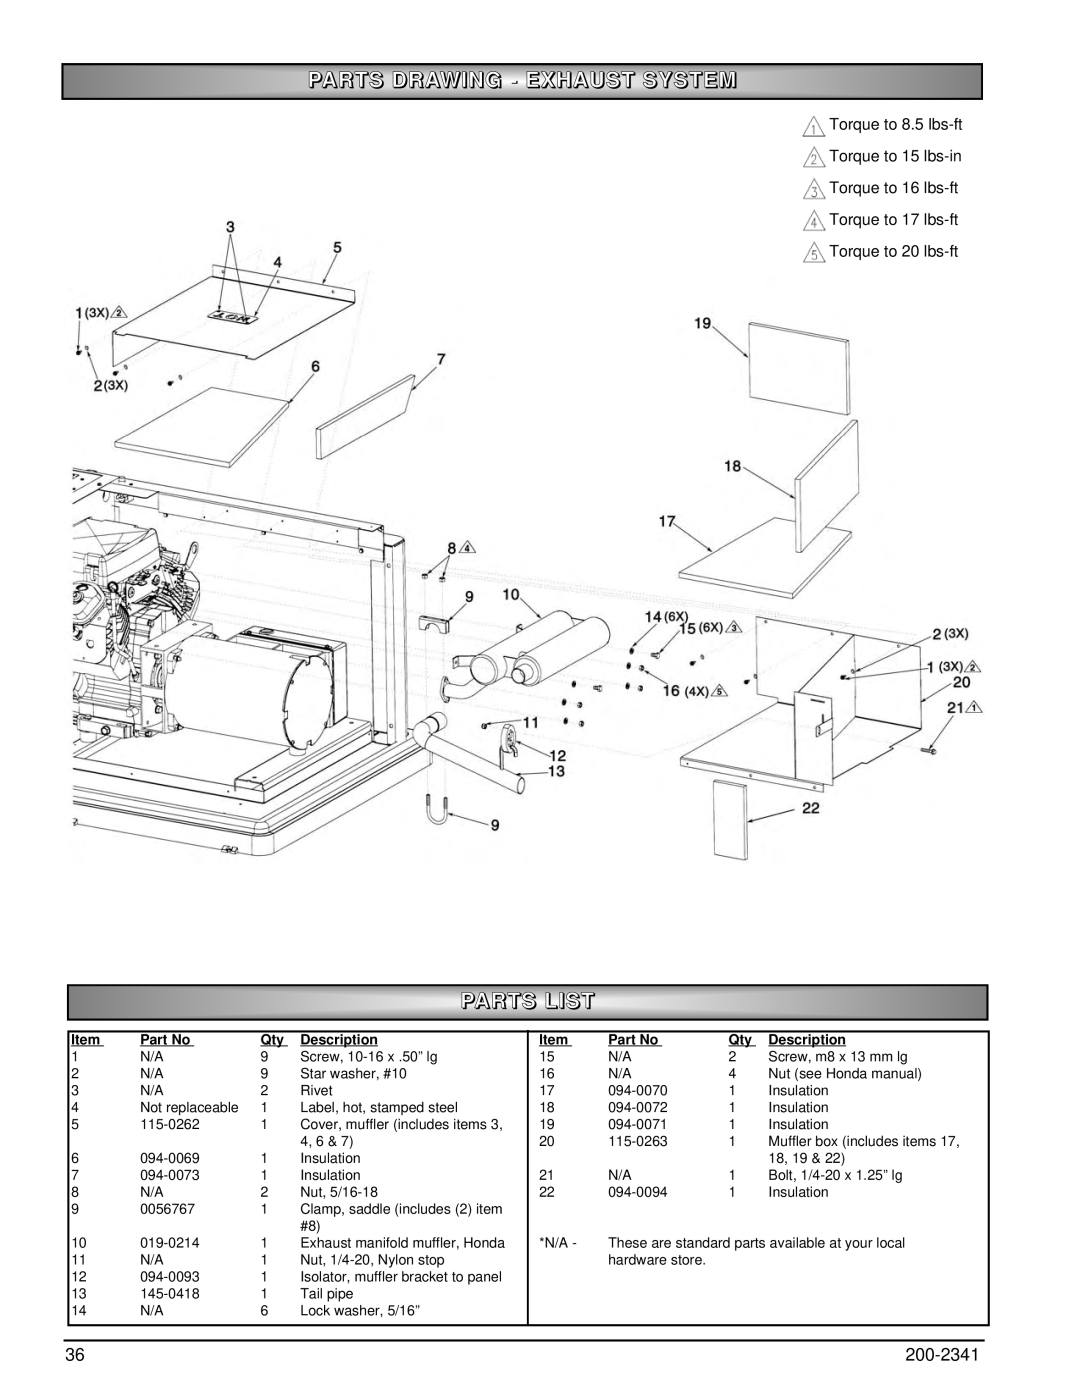 Powermate PM400911 owner manual Parts Drawing - Exhaust System, Parts List, Description 